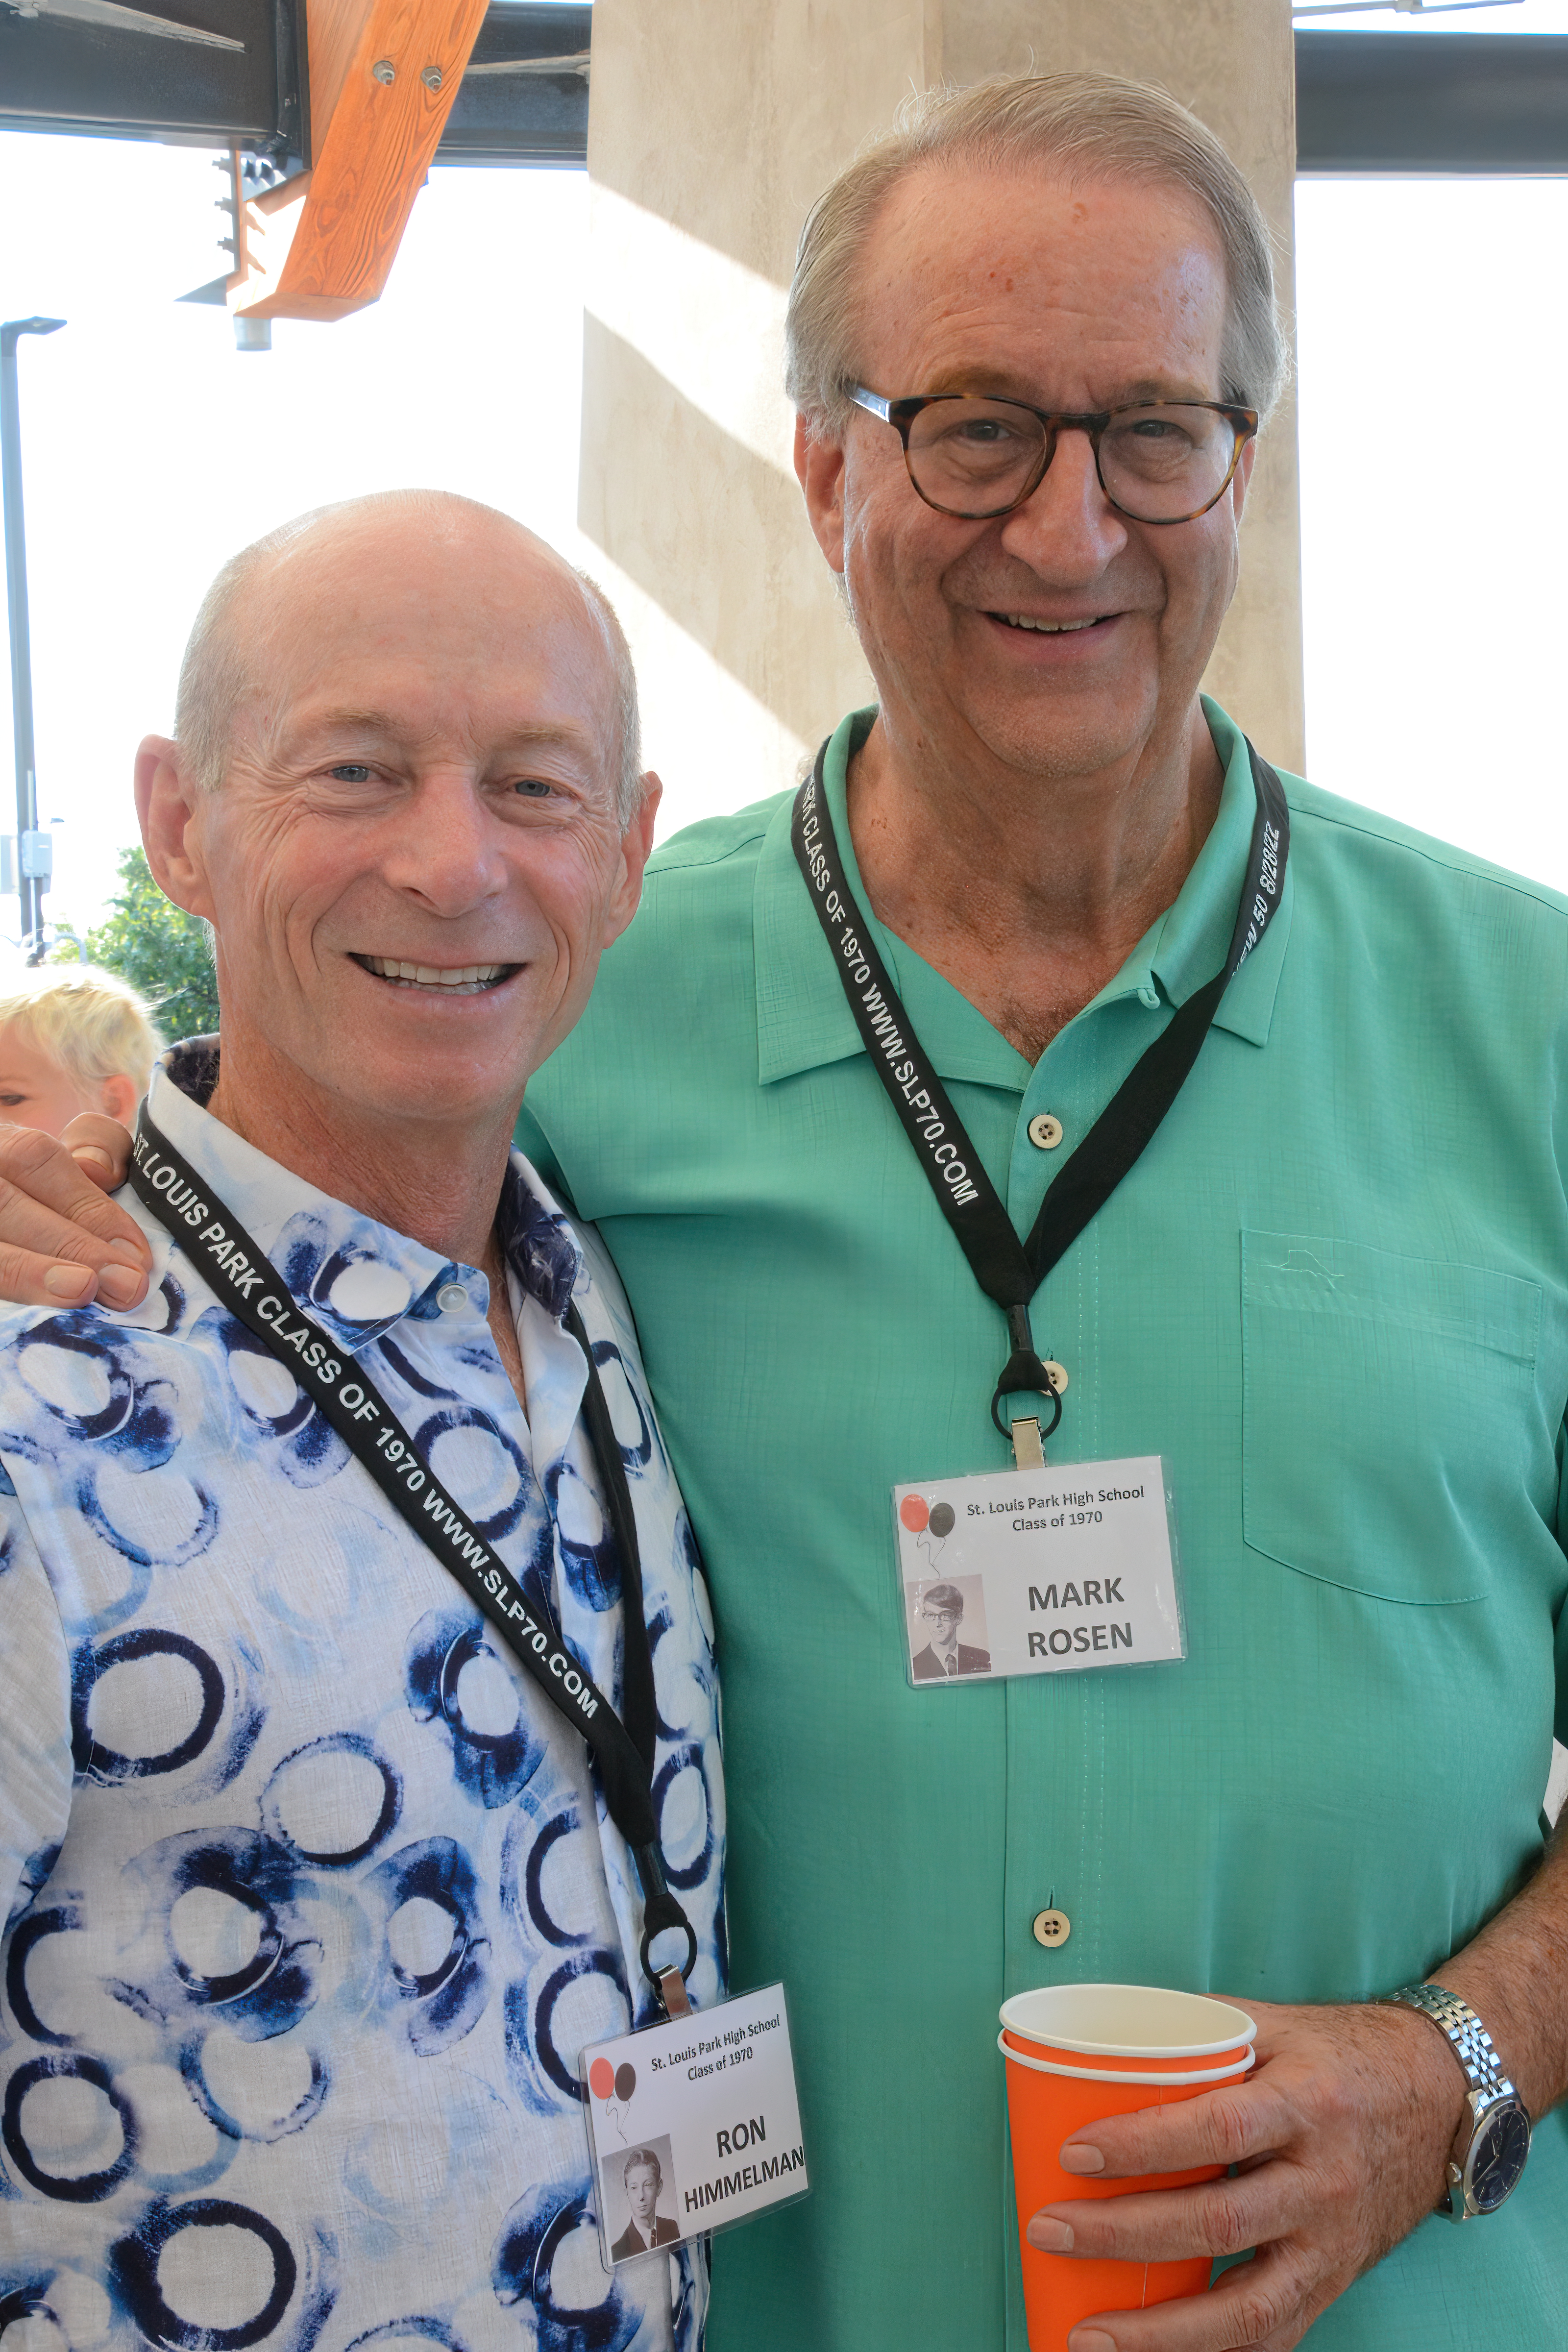 Ron Himmelman and Mark Rosen